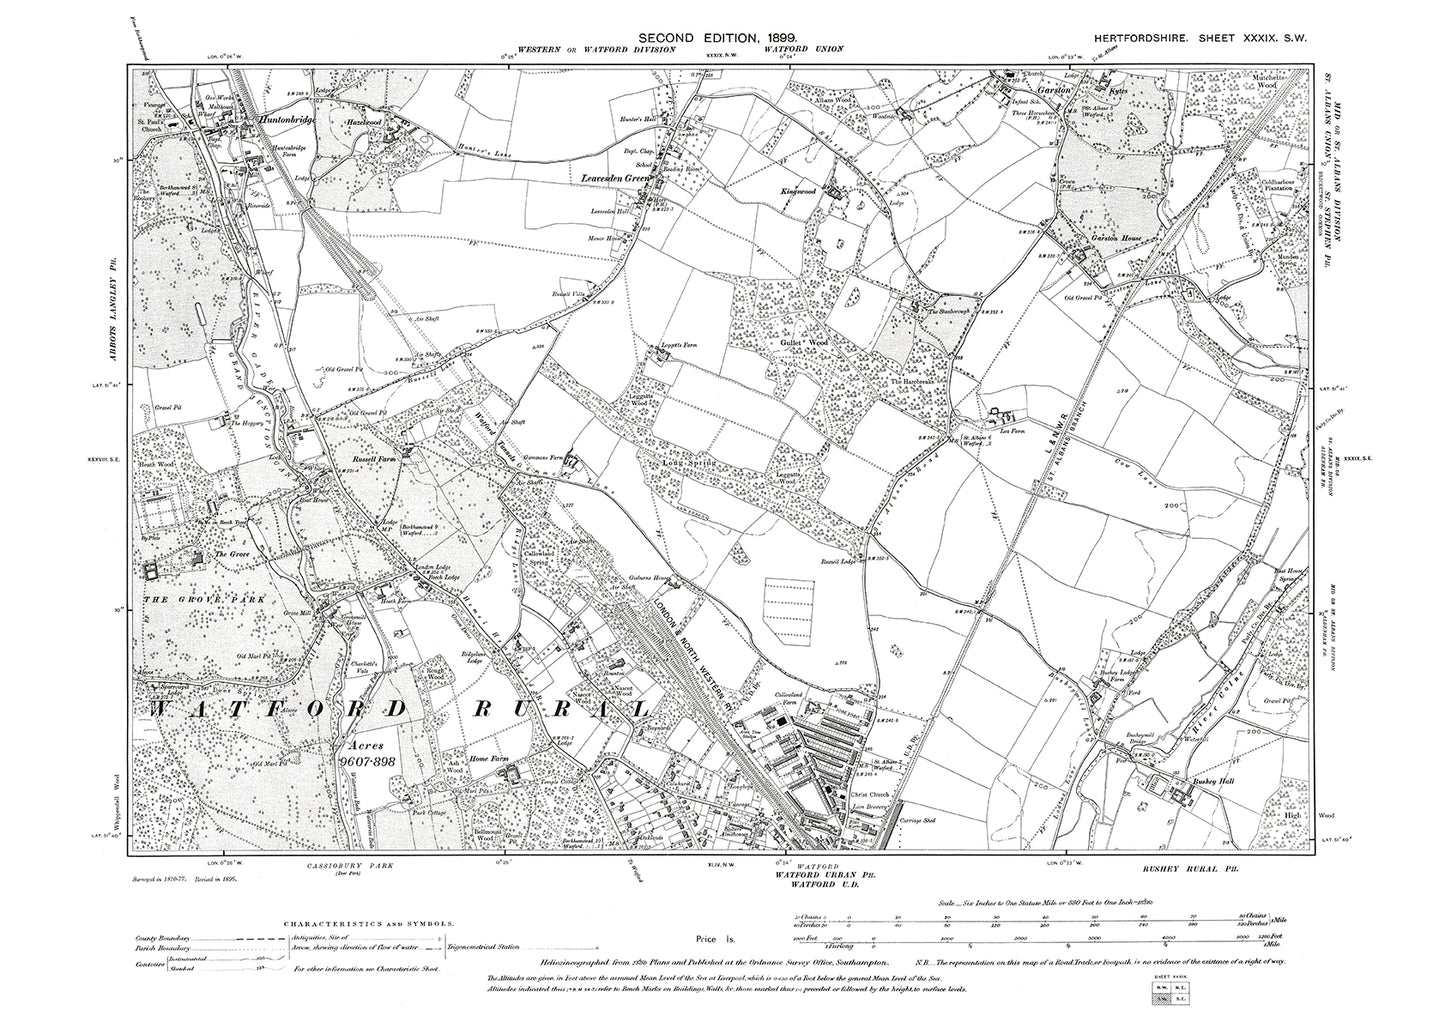 Old OS map dated 1899, showing Watford, Huntonbridge, Leavesden Green, Garston in Hertfordshire - 39SW